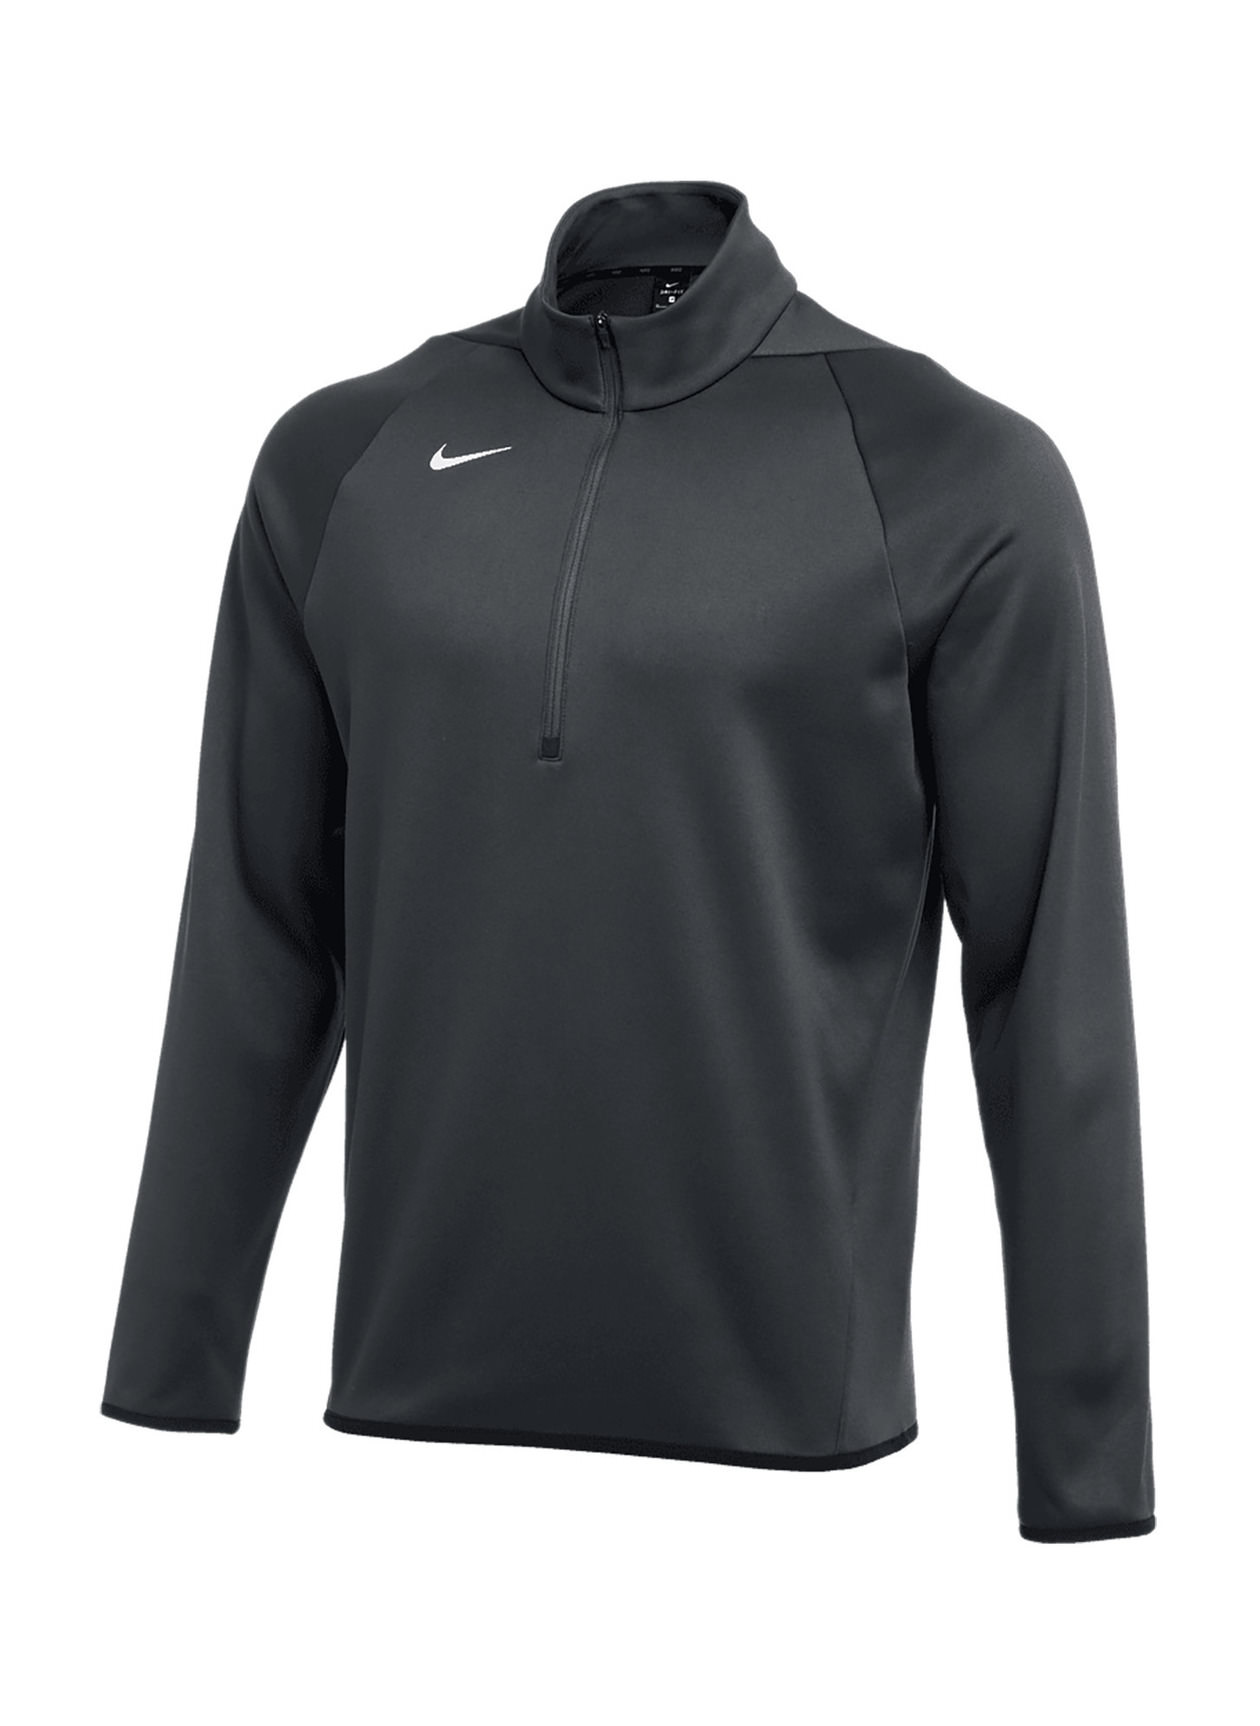 Nike Men's Team Anthracite Therma Long-Sleeve Quarter-Zip